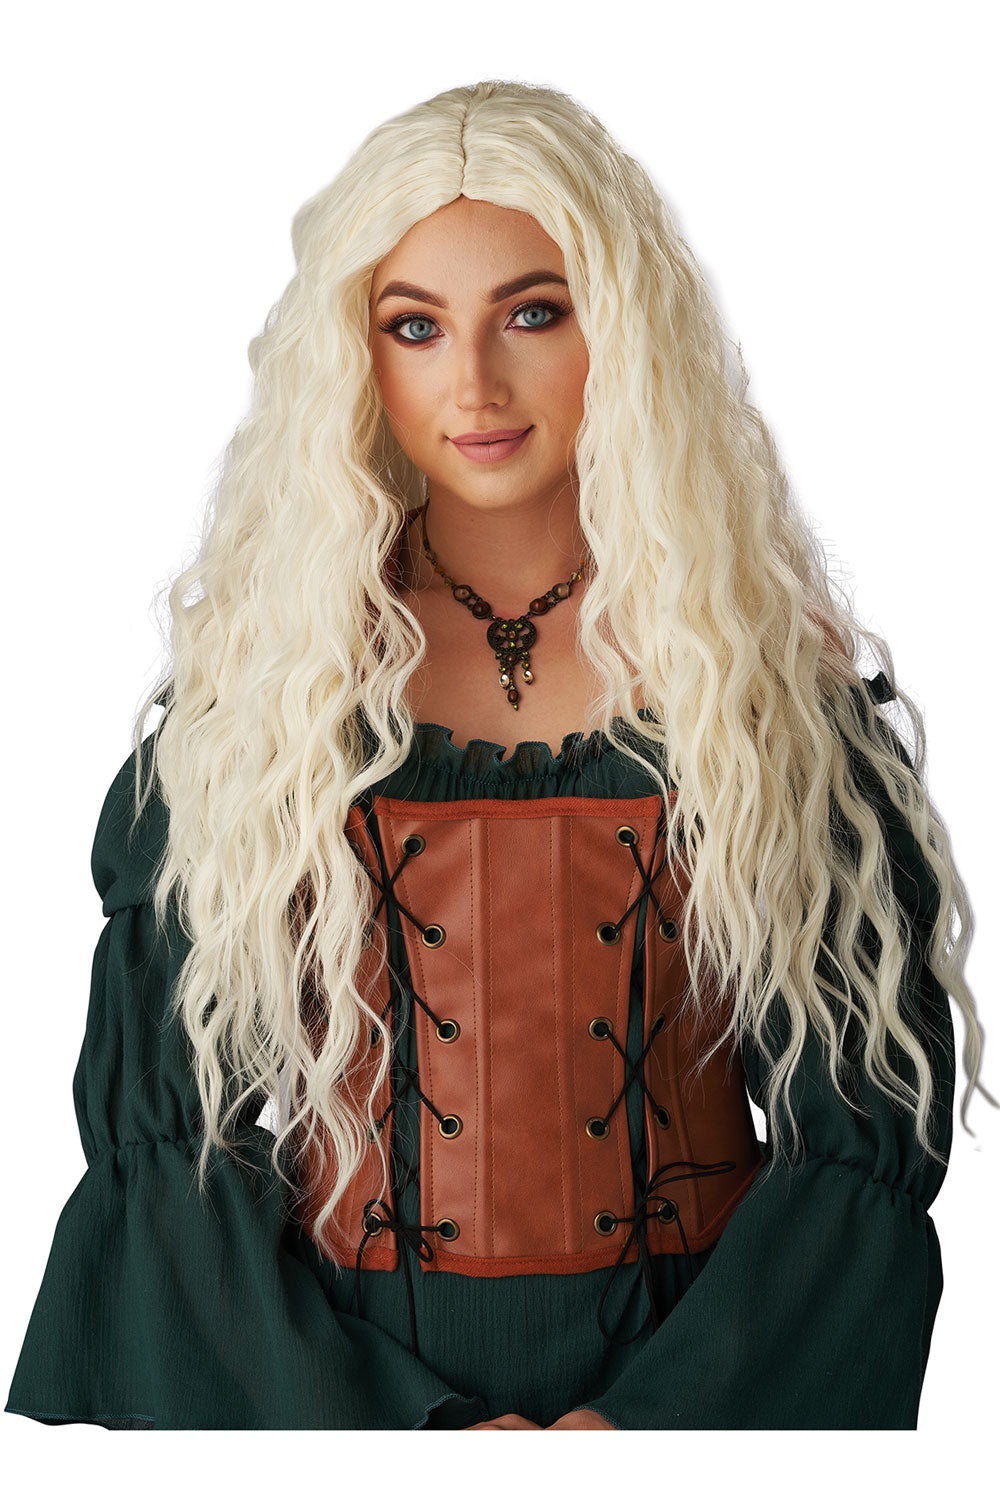 Renaissance Maiden Wig California Costume 7020/047